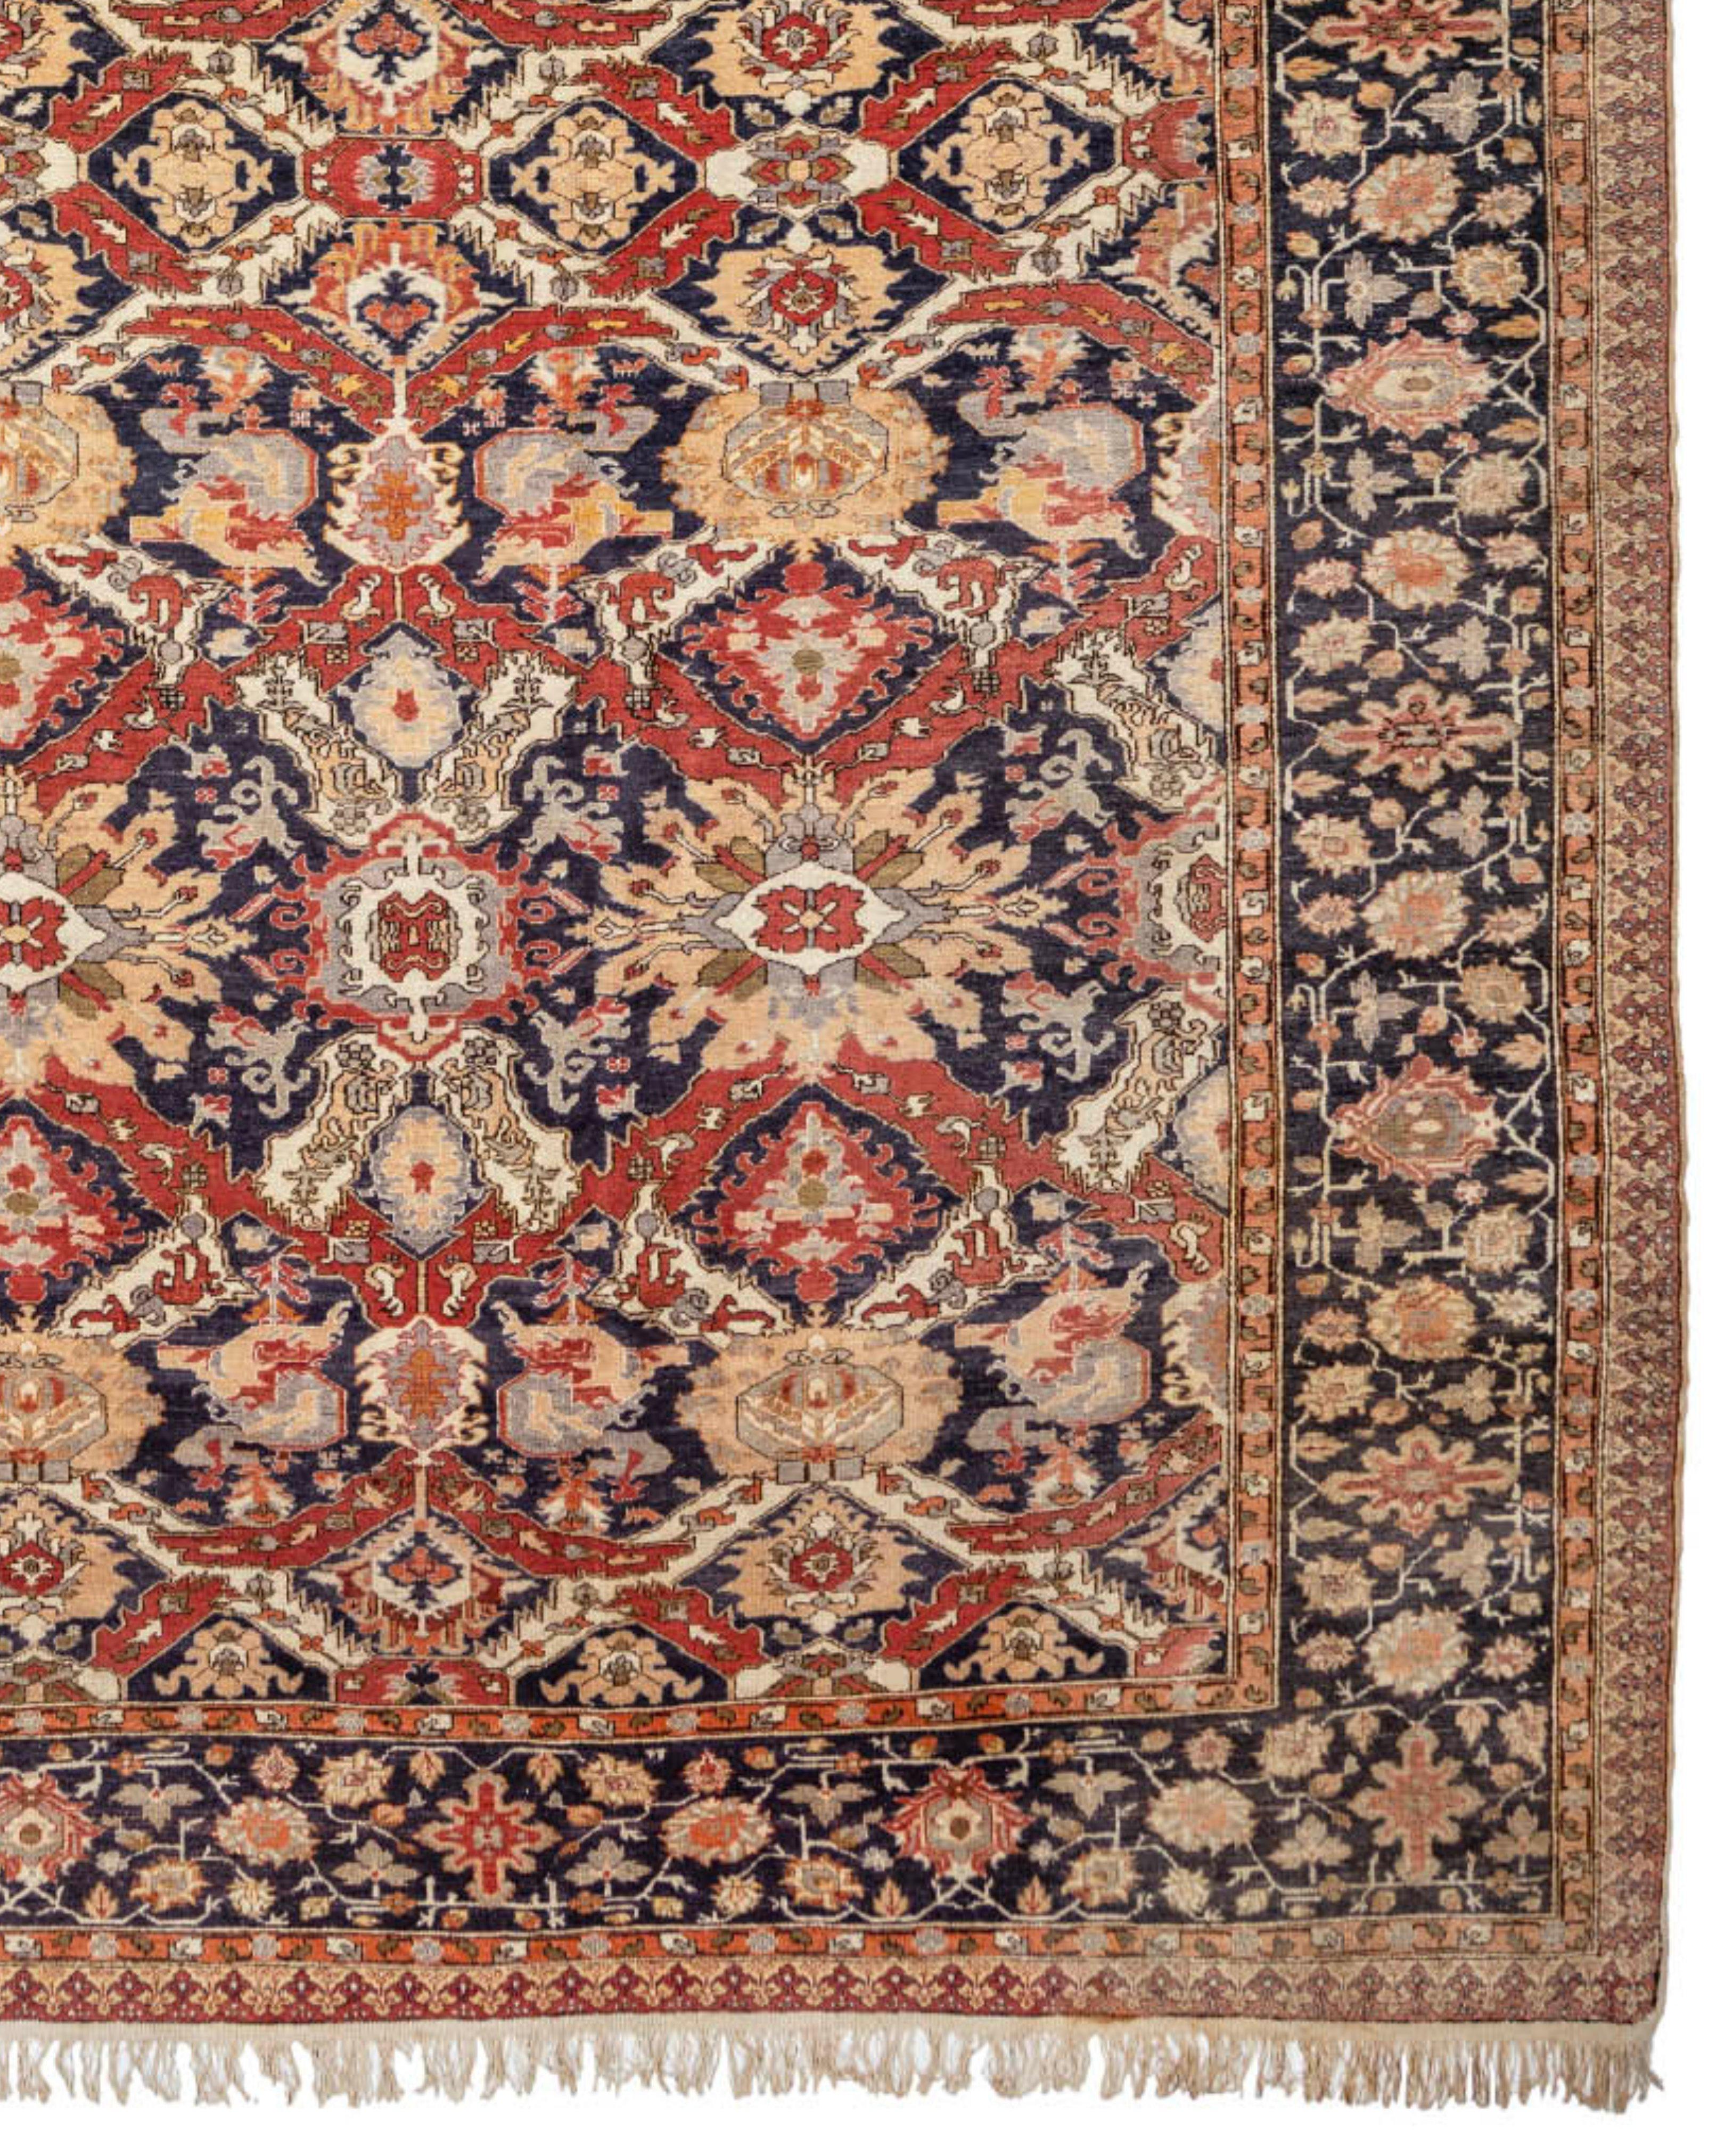 Antique Large Turkish Kayseri Carpet, c. 1900

Additional Information:
Dimensions: 12'8